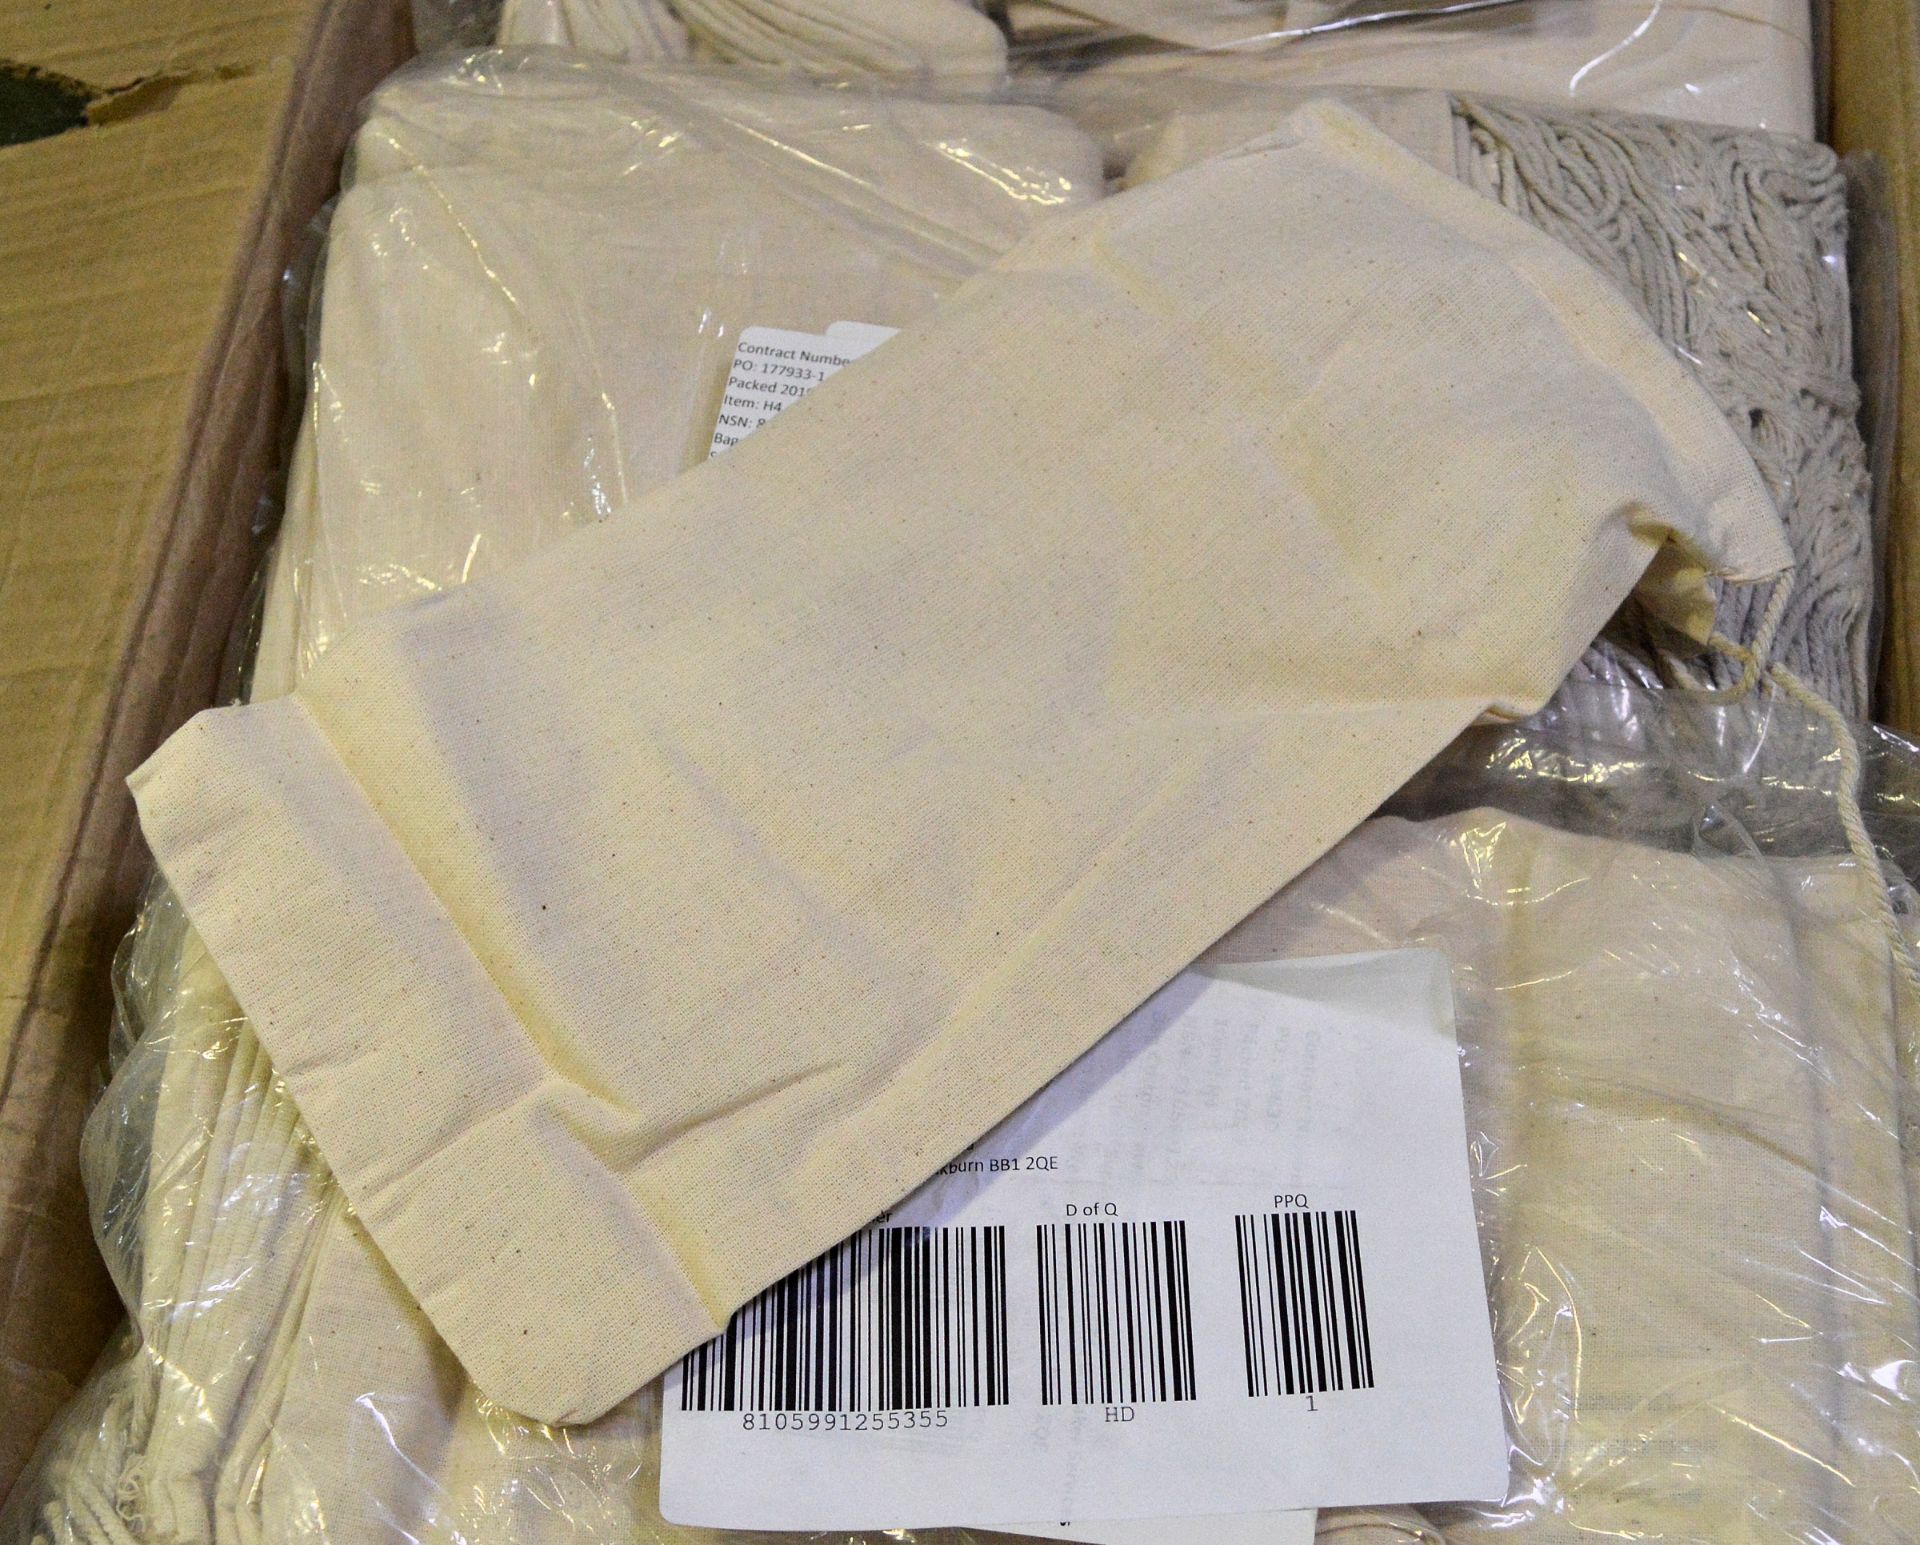 Drawstring Bags (unbleached) - 30 x 15cm - 100 per pack - 3 packs per box - 2 boxes - Image 4 of 4